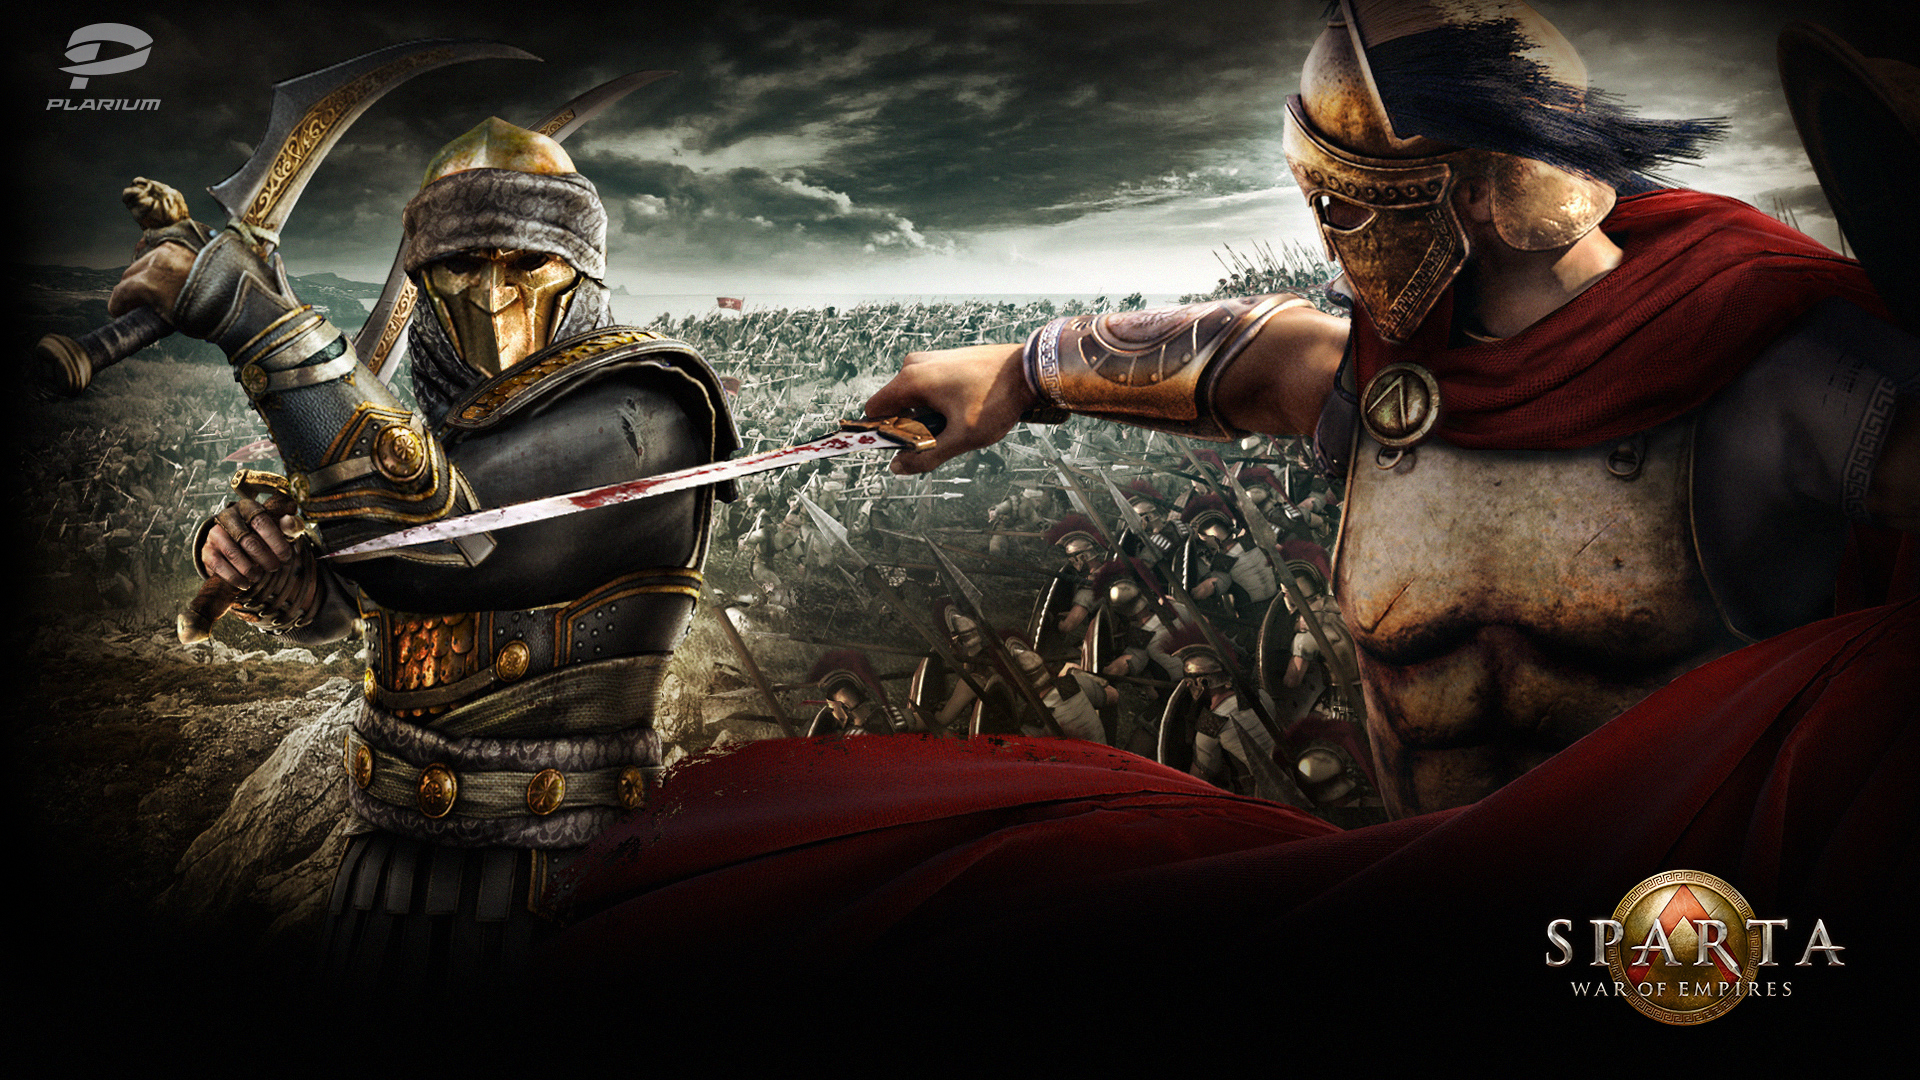 Sparta War Of Empires Wallpaper